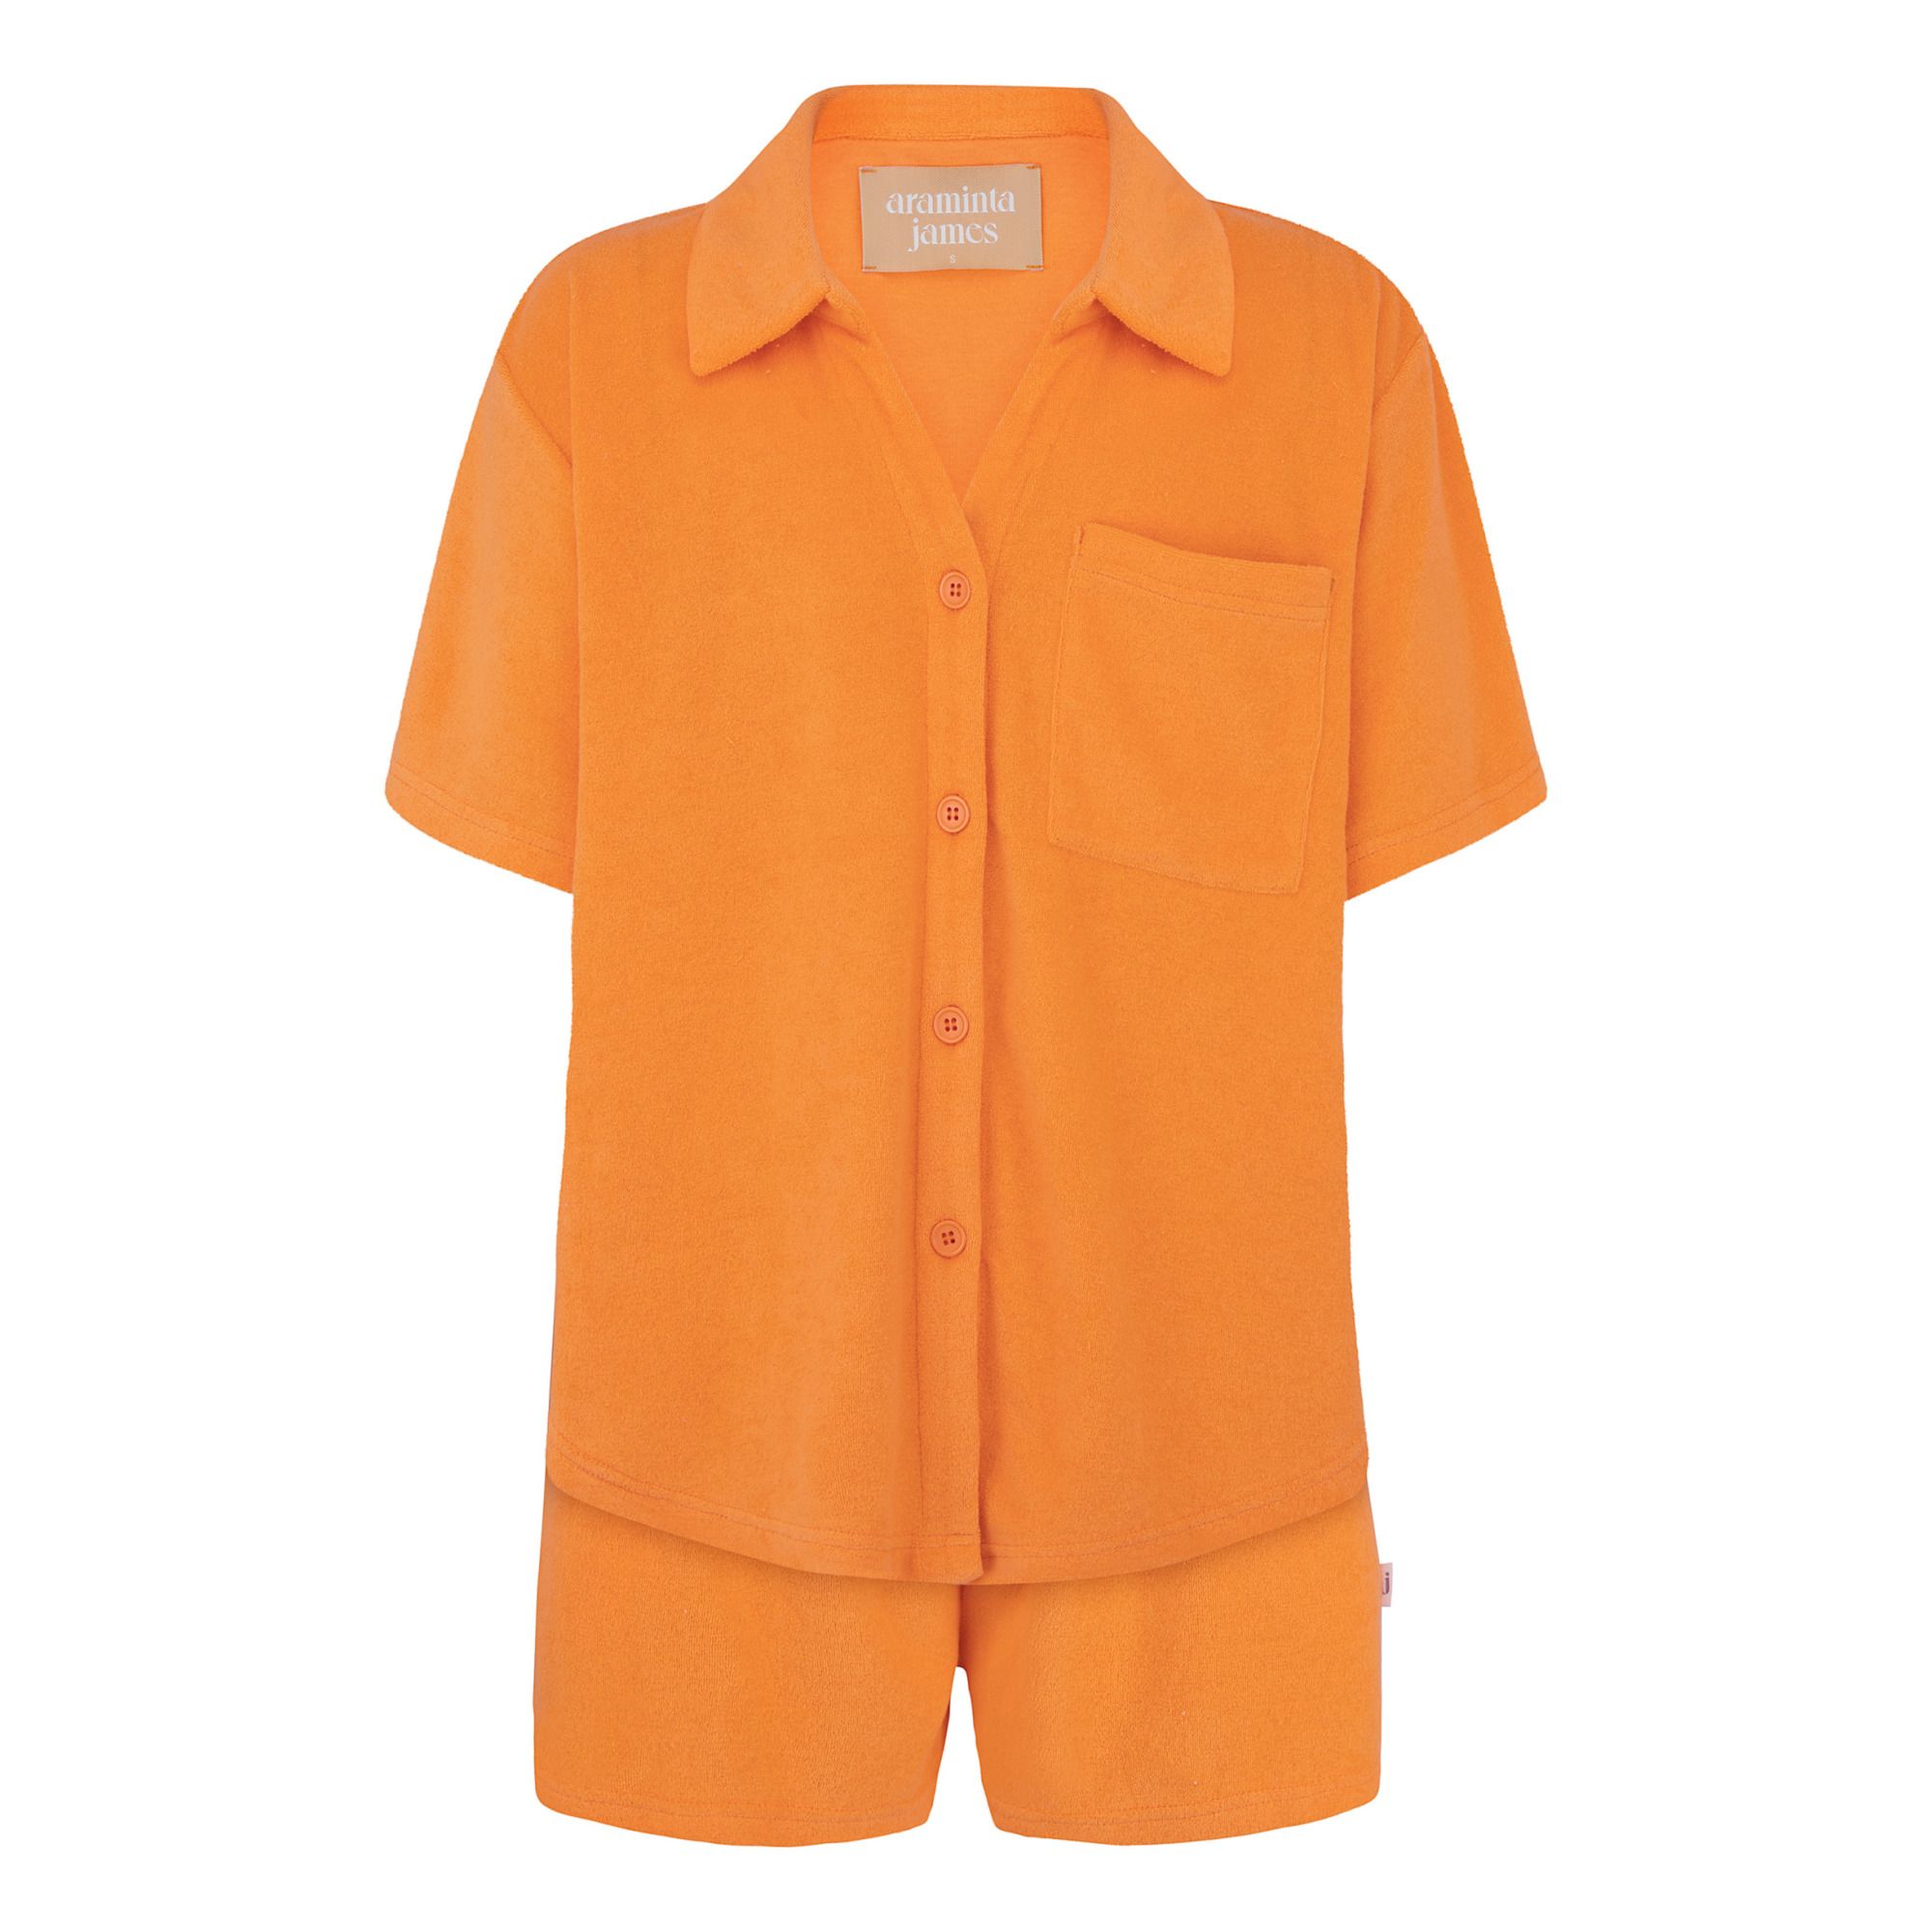 Terry Cloth Shirt Top & Bottom Set Orange Araminta James Fashion Adult | Smallable DE